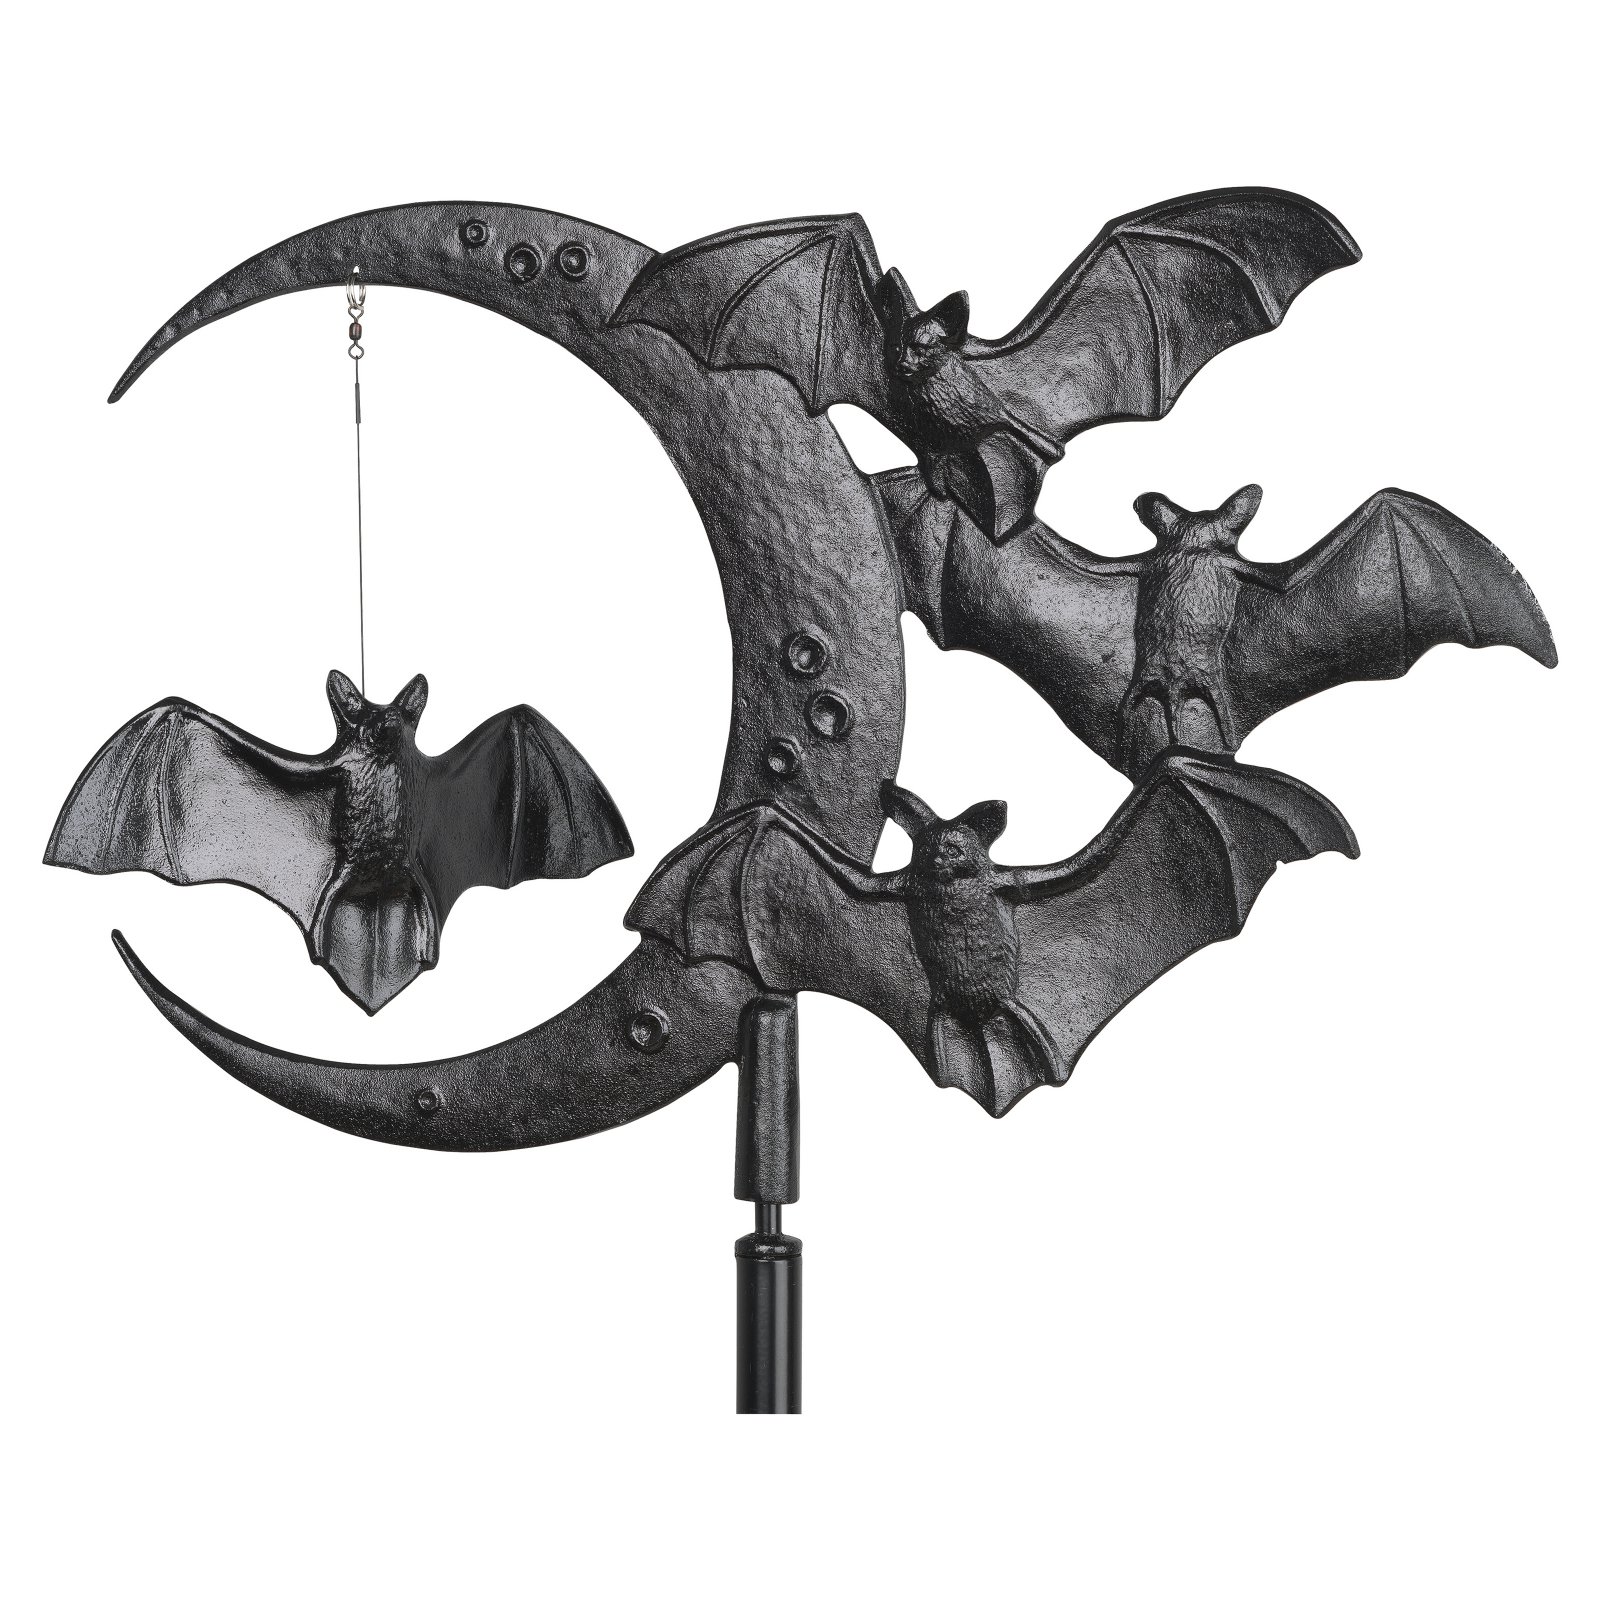 Whitehall Products 60122 Halloween Bat Garden Weathervane - Black - image 2 of 2